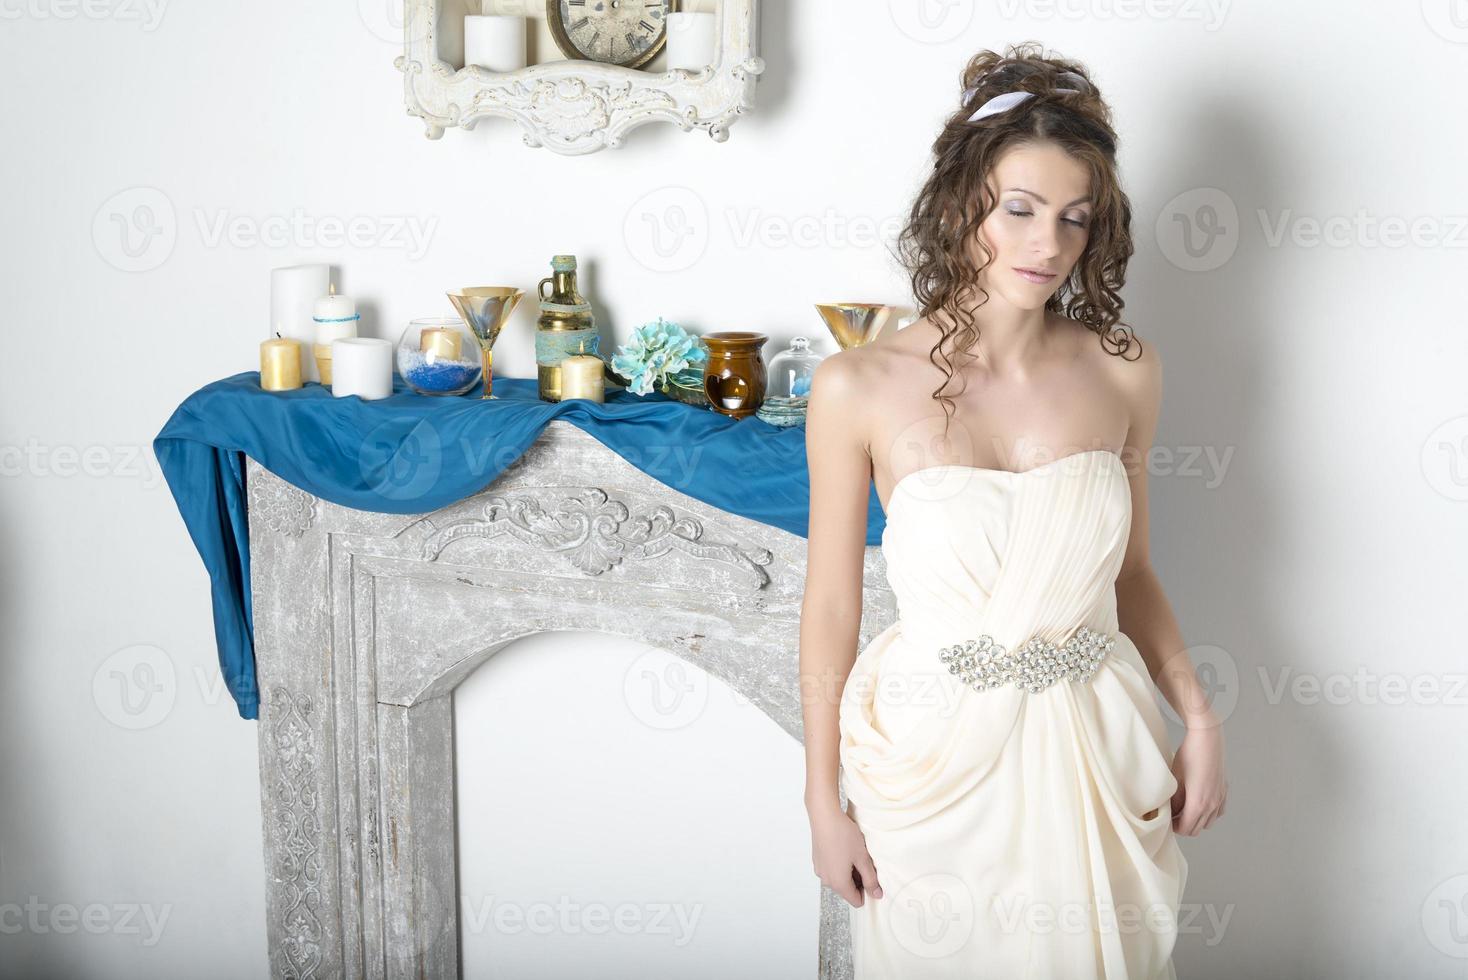 garota de branco perto da lareira decorativa. foto